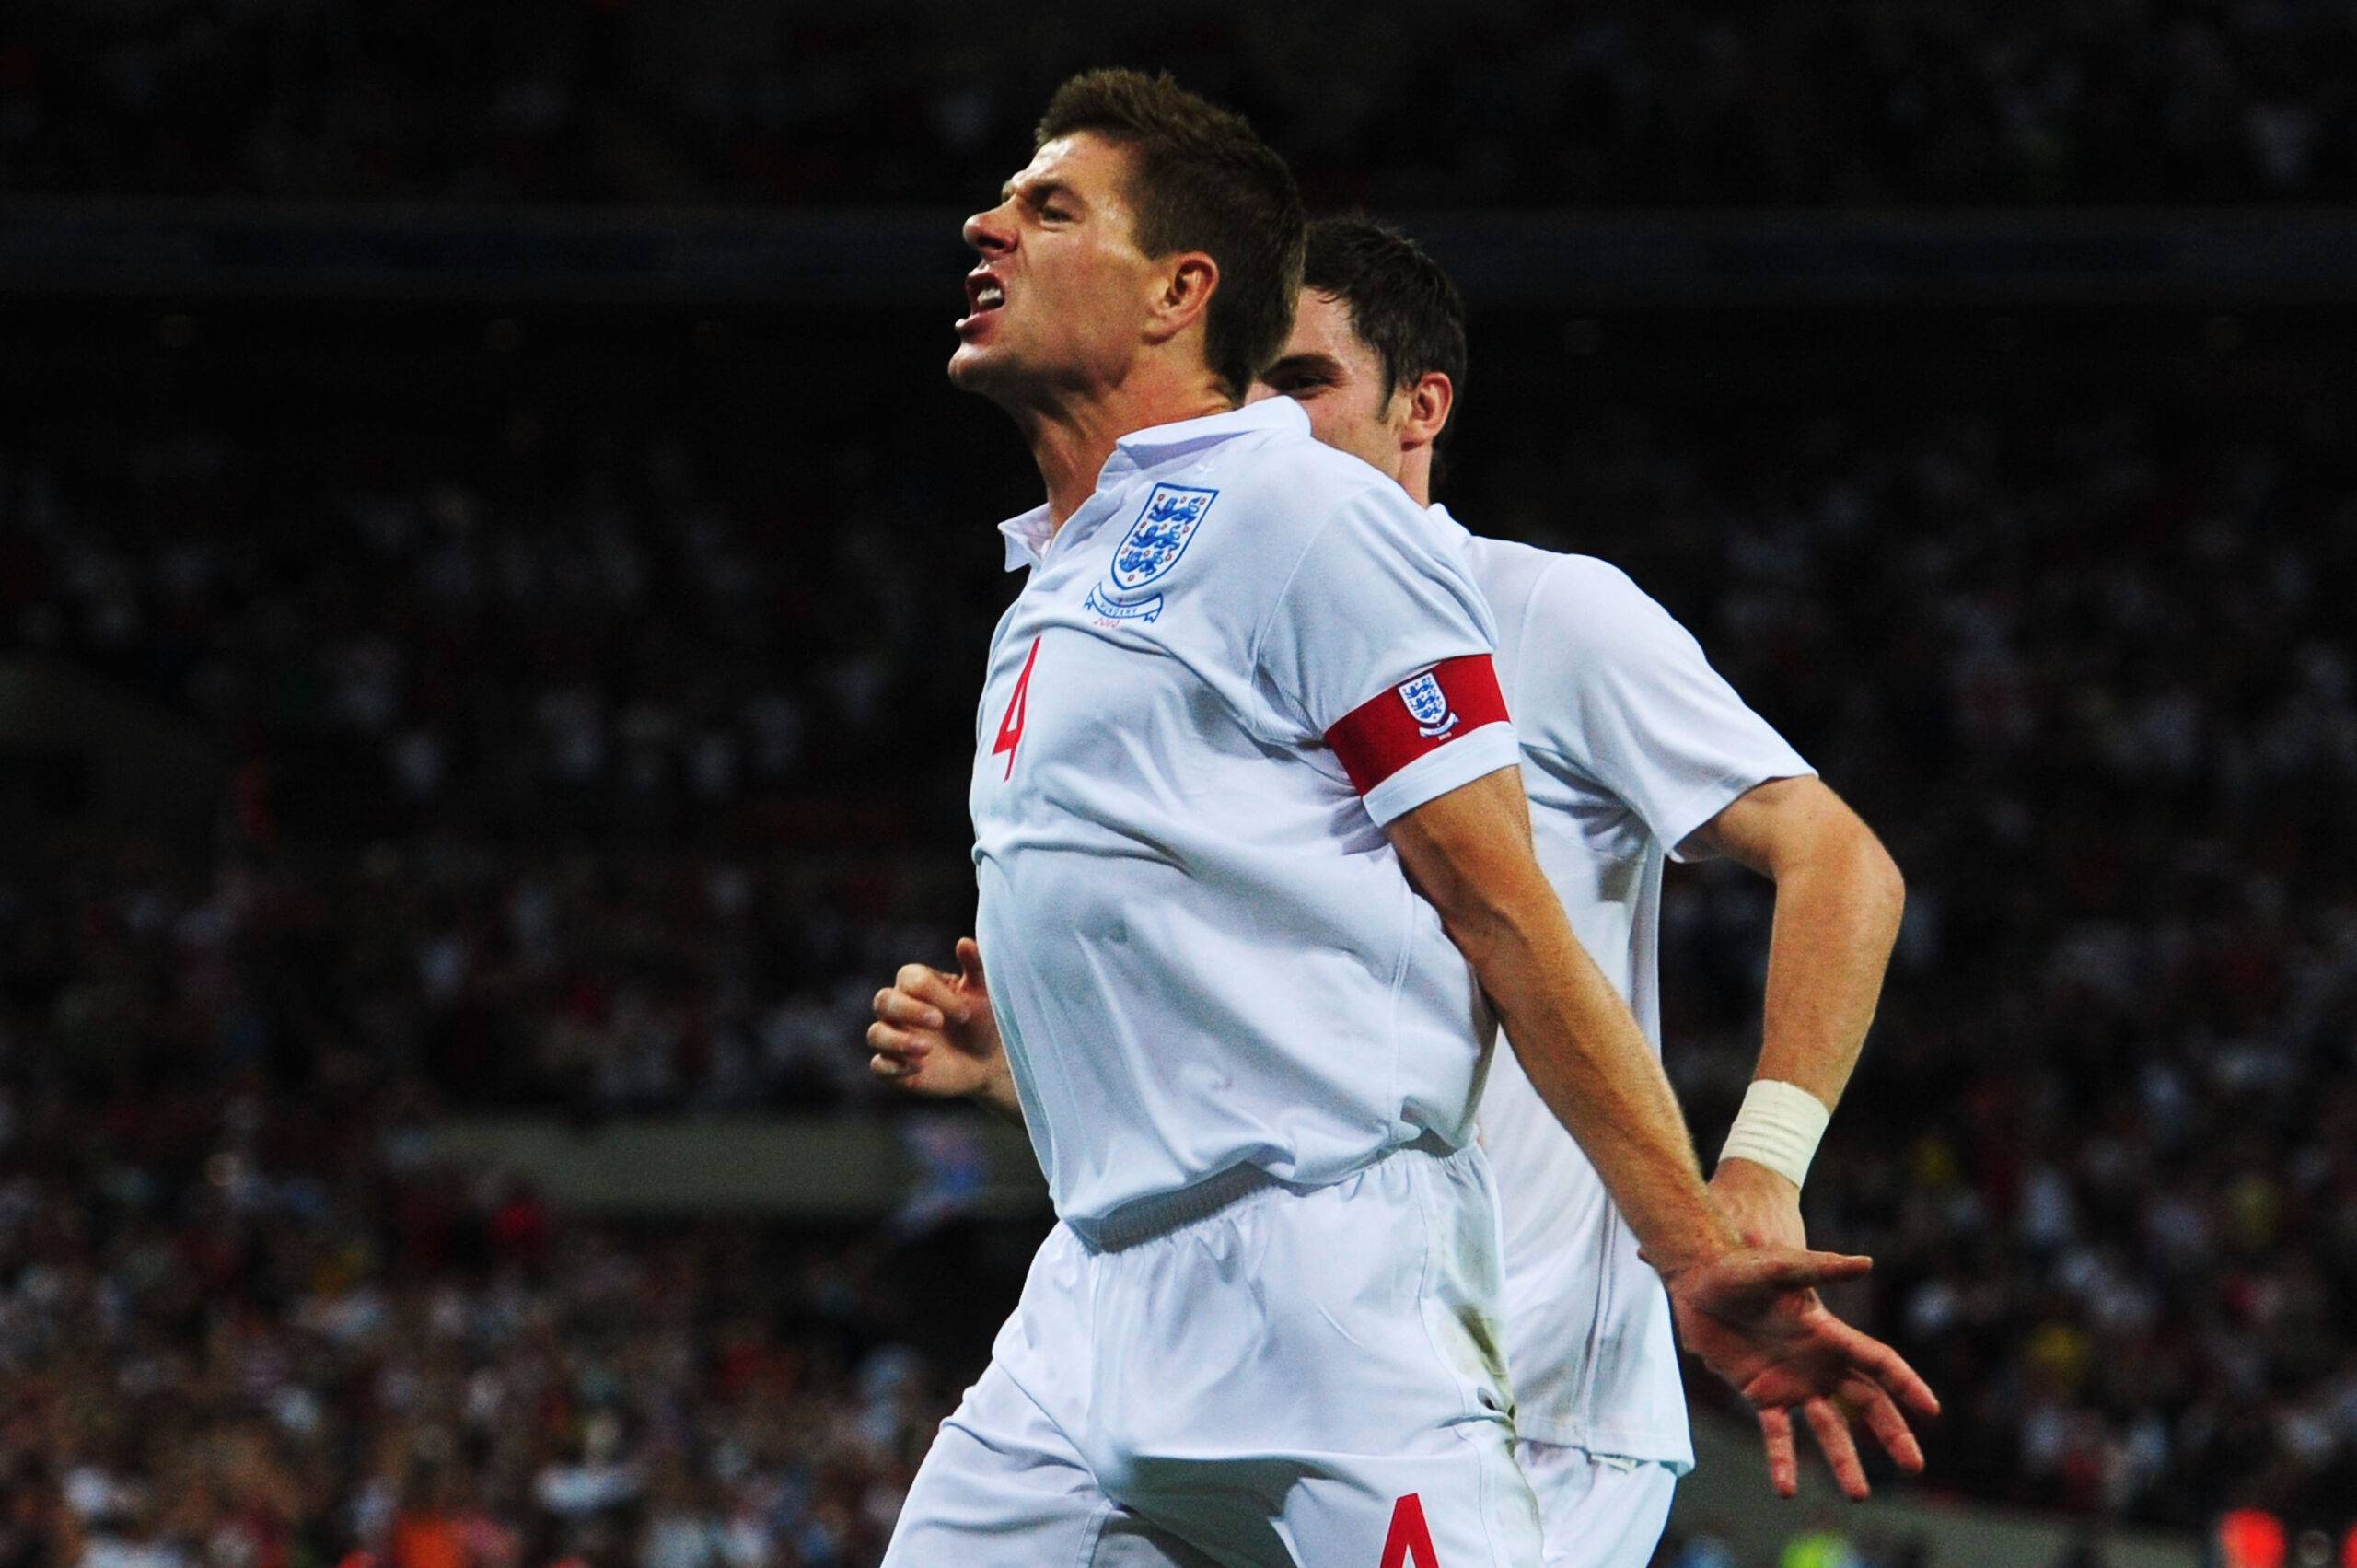 Gerrard celebrates scoring for England.